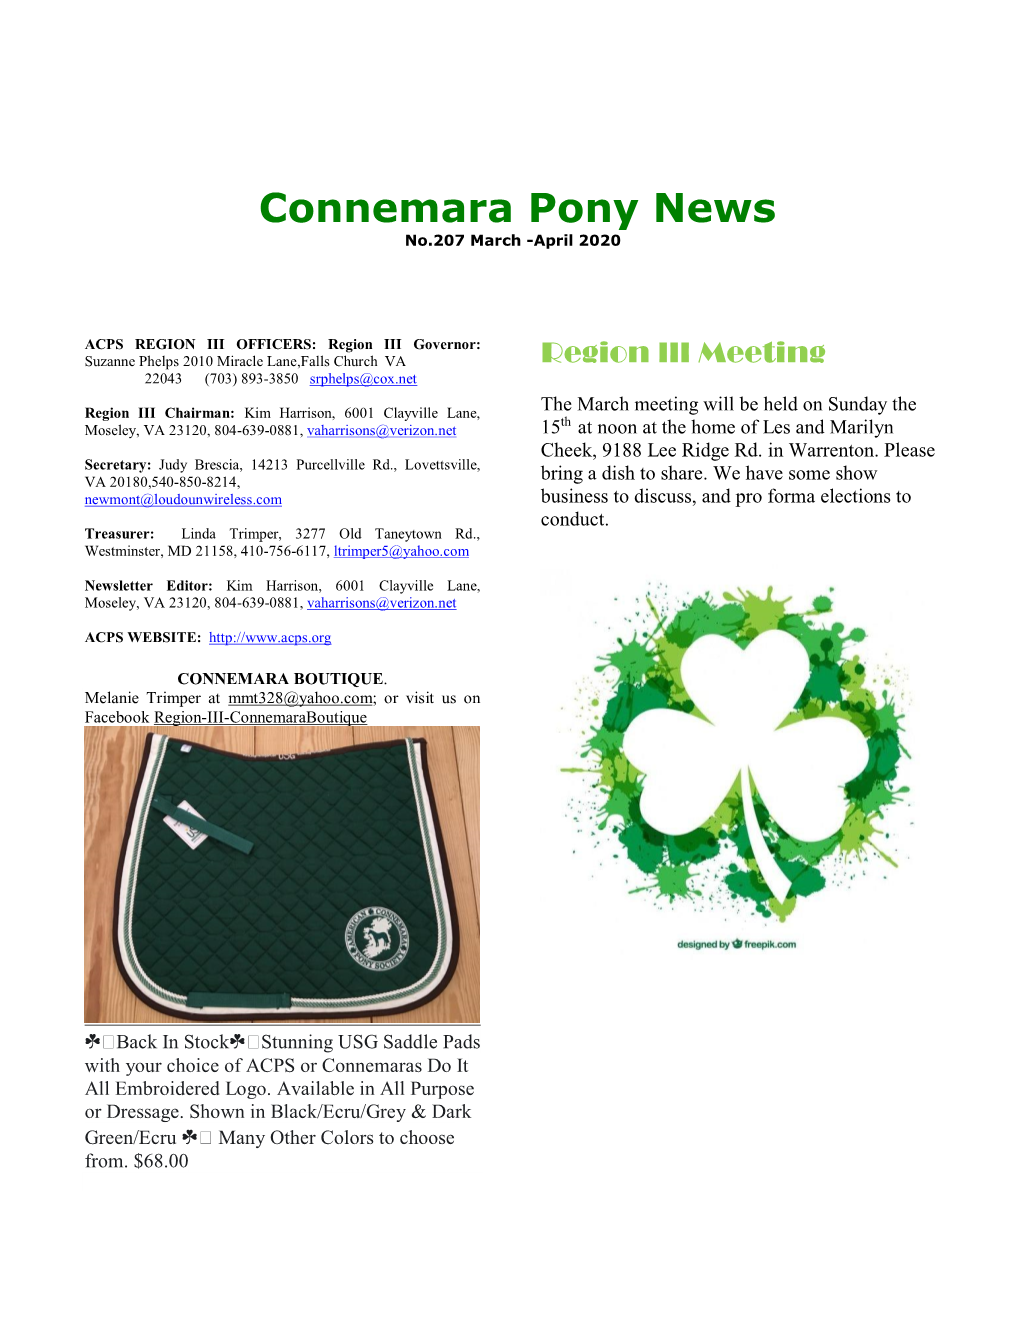 Connemara Pony News No.207 March -April 2020